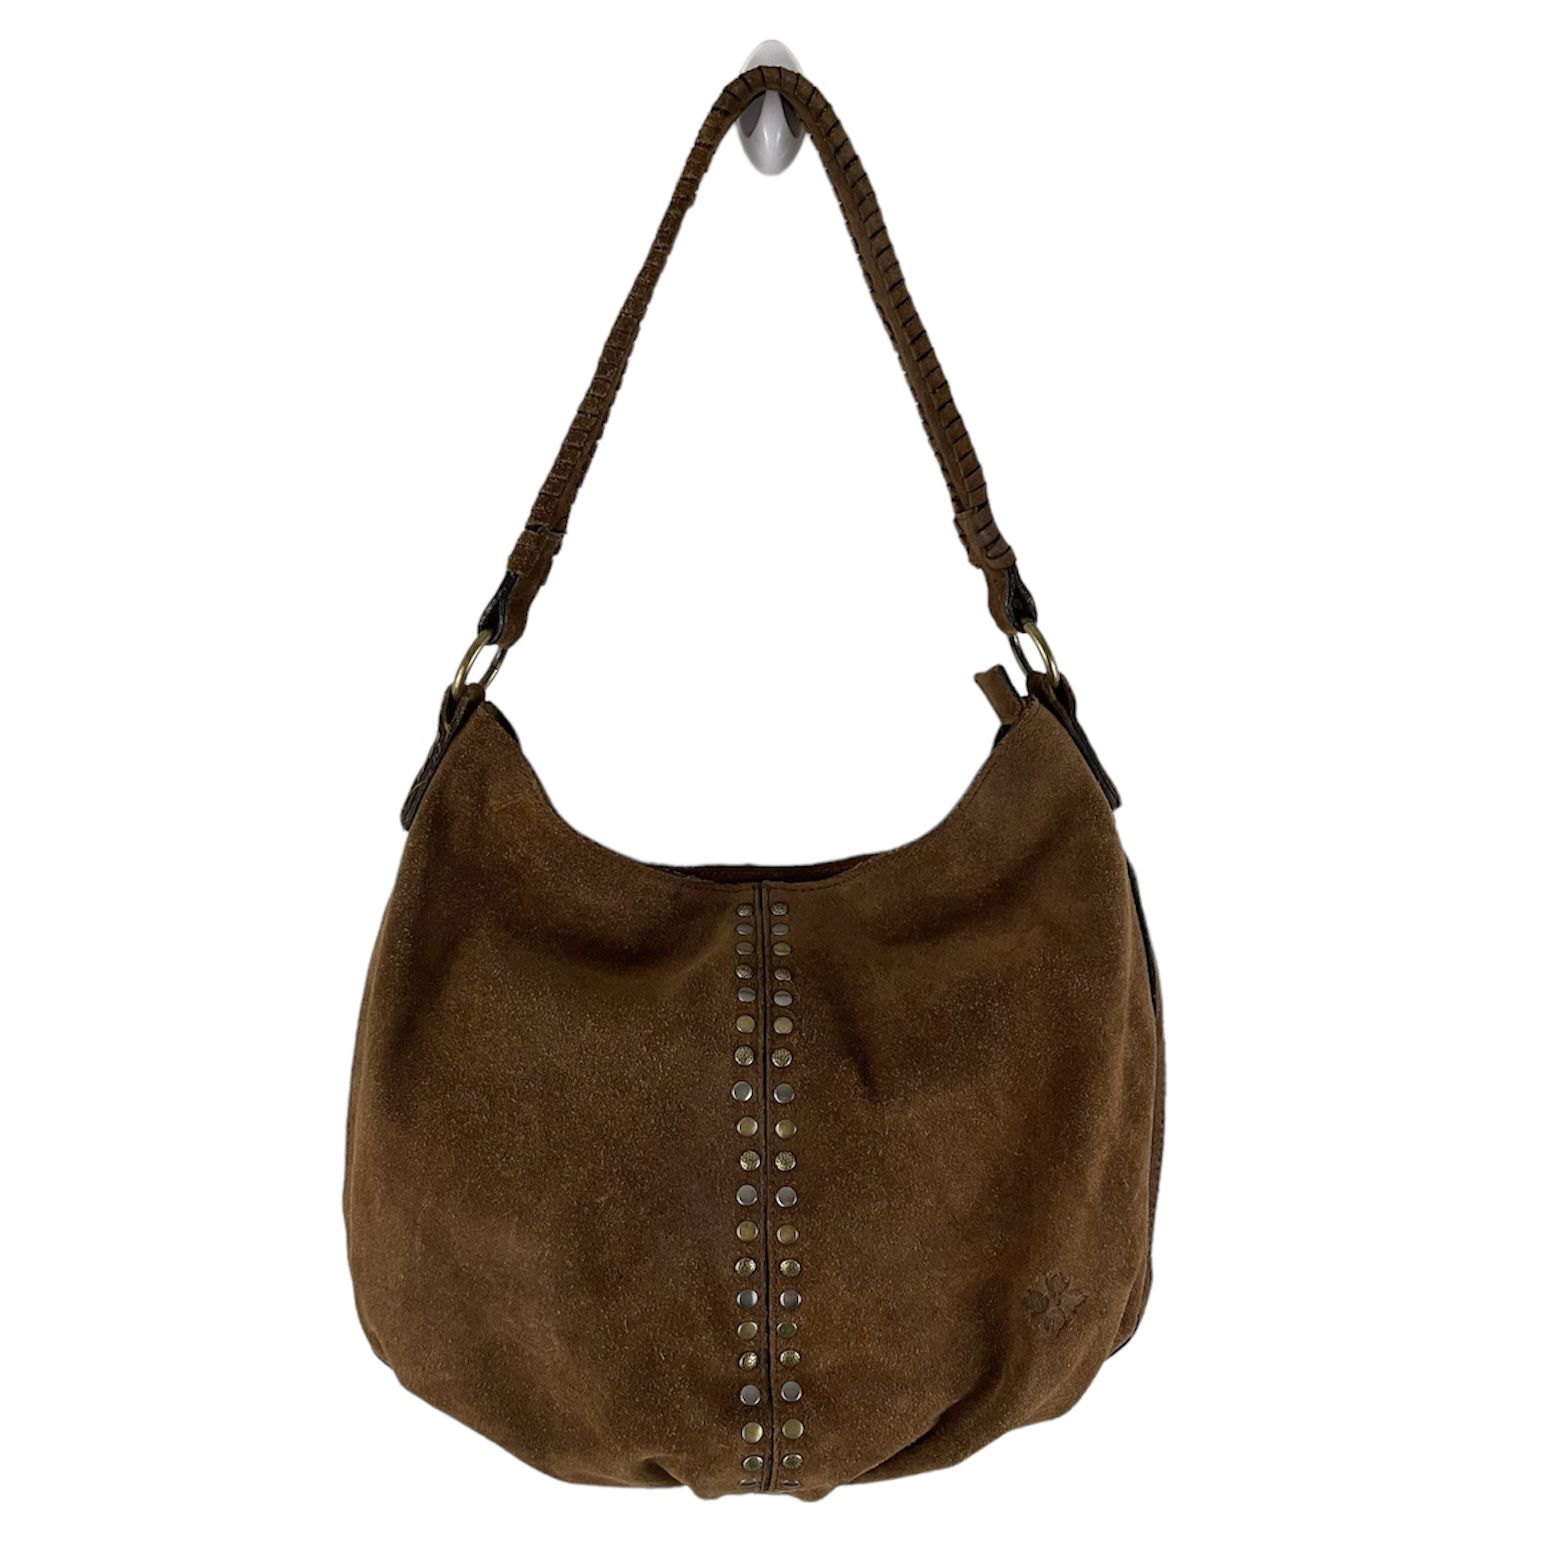 PATRICIA NASH Cognac Brown Suede Leather Bello Studded Hobo Shoulder Bag Purse